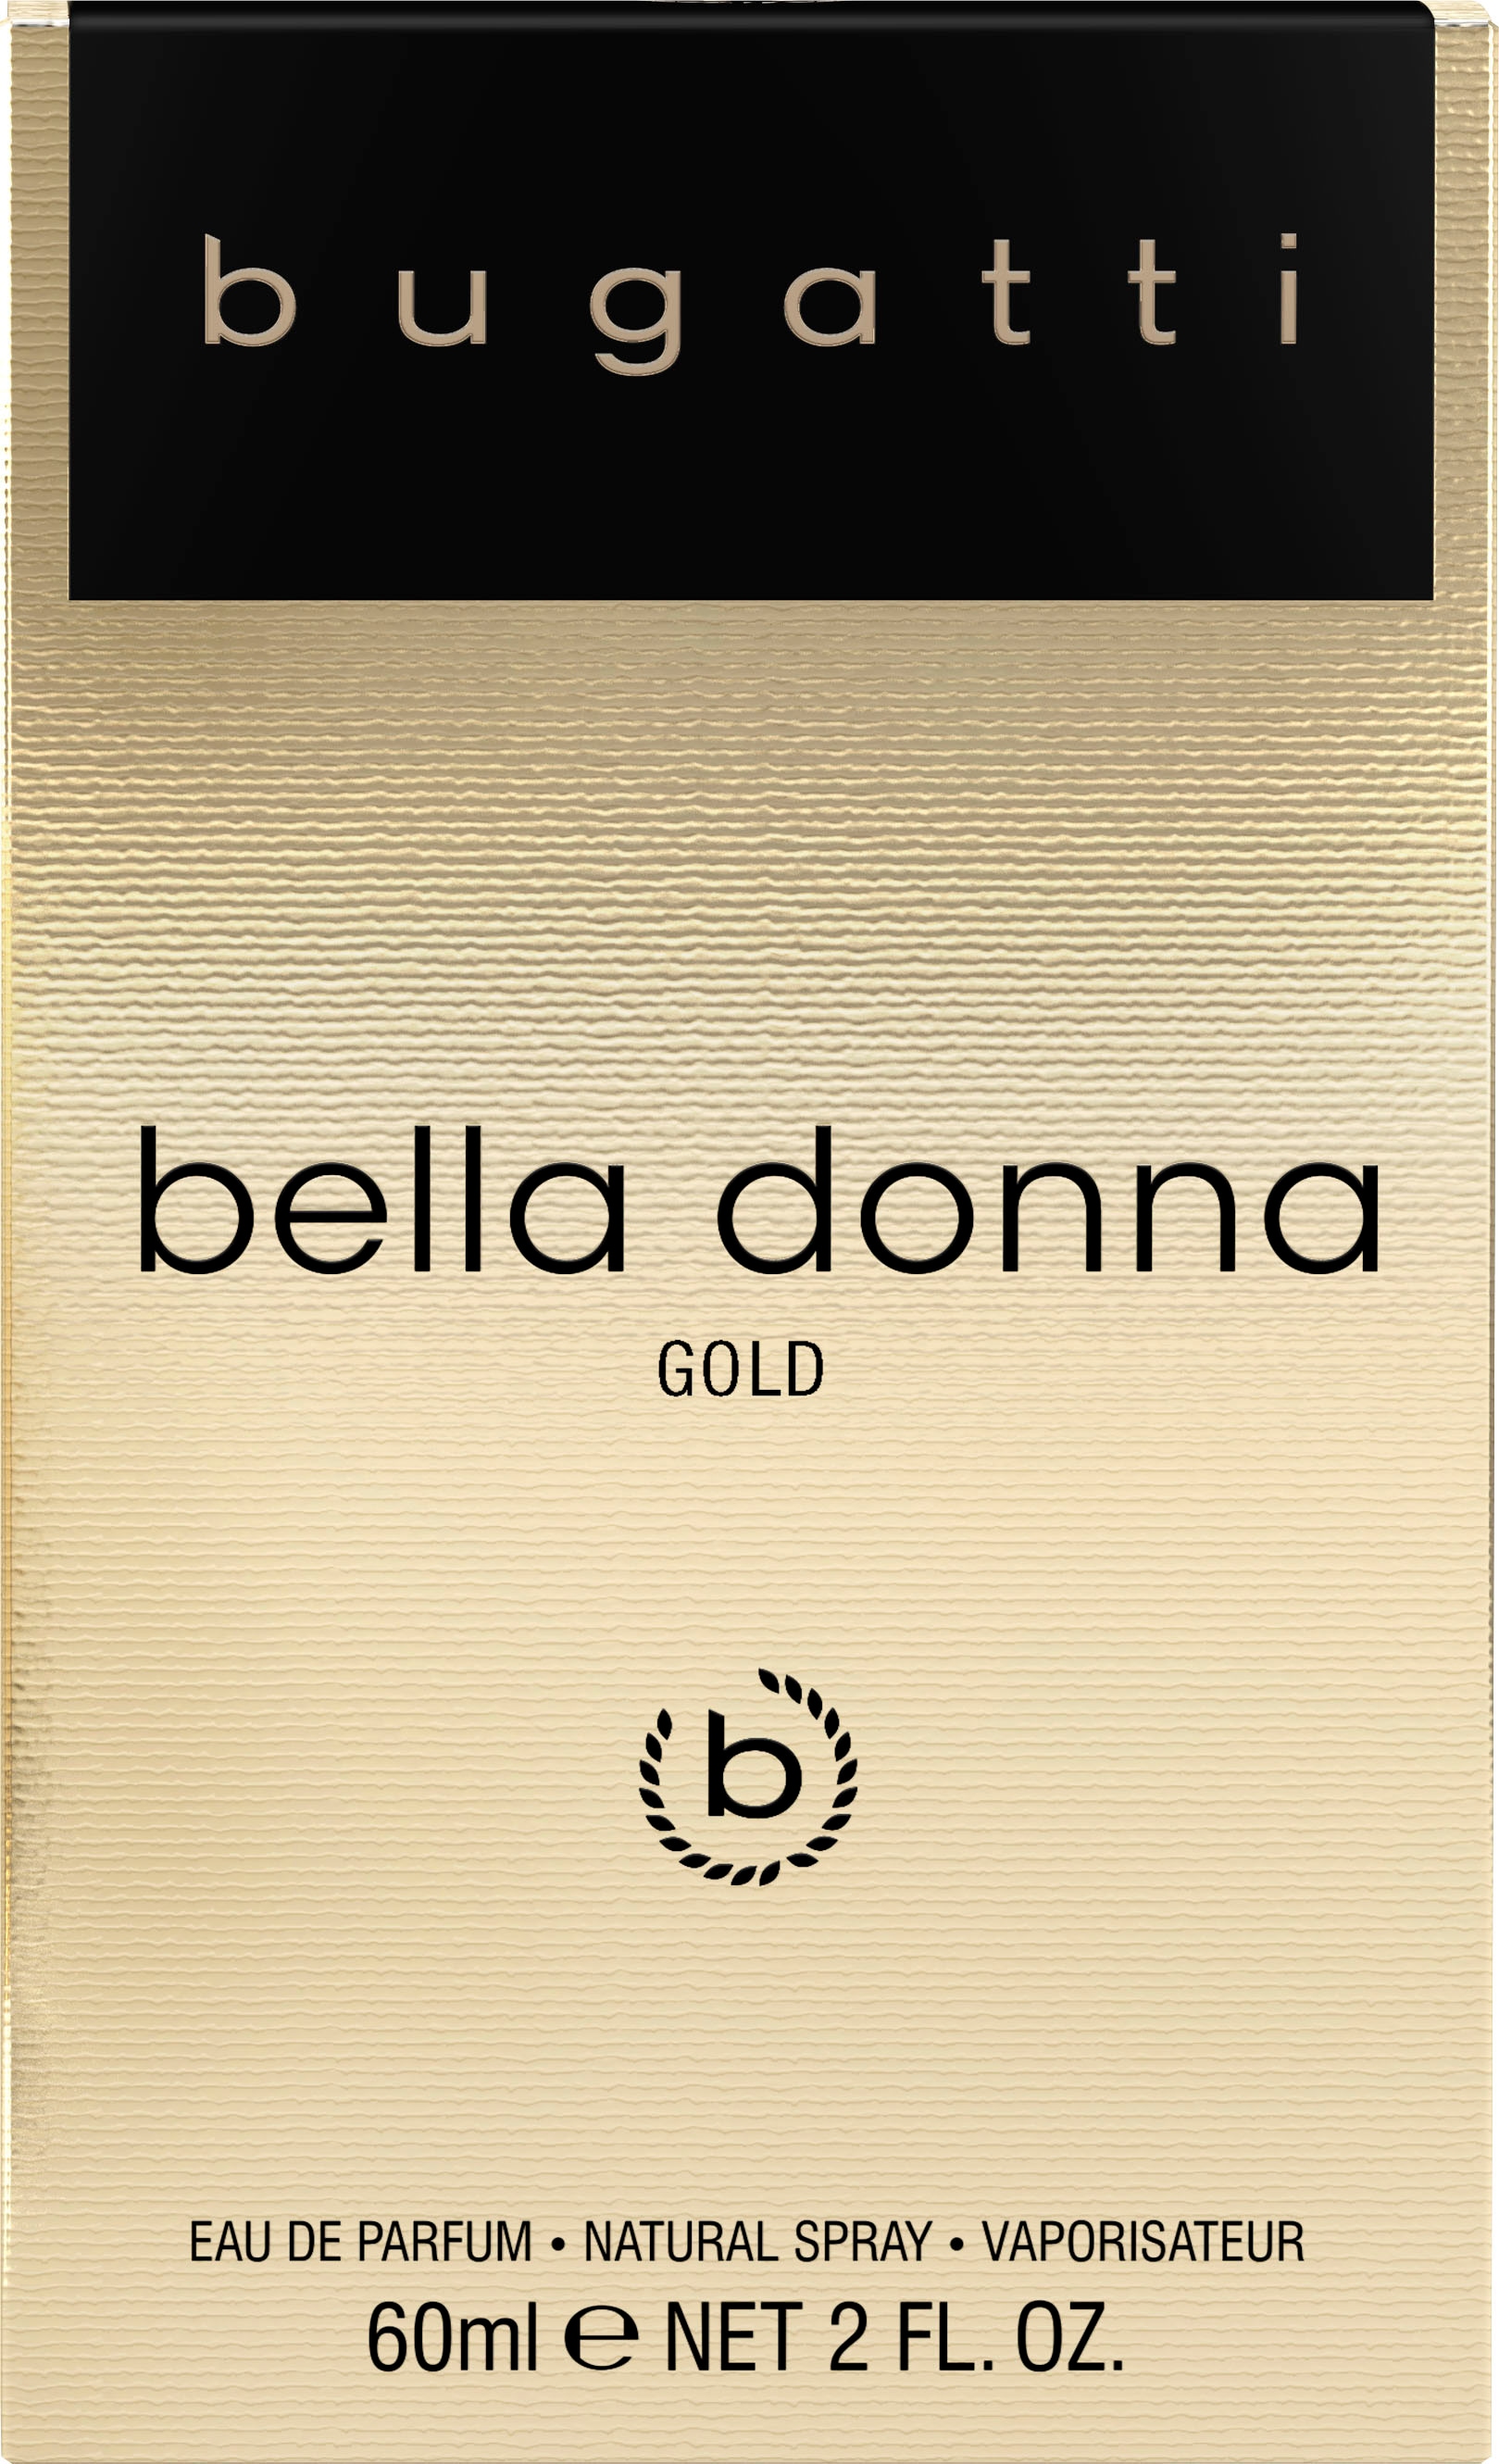 Donna Parfum 60 EdP Eau Gold de »BUGATTI bugatti Bella UNIVERSAL bei ml« online